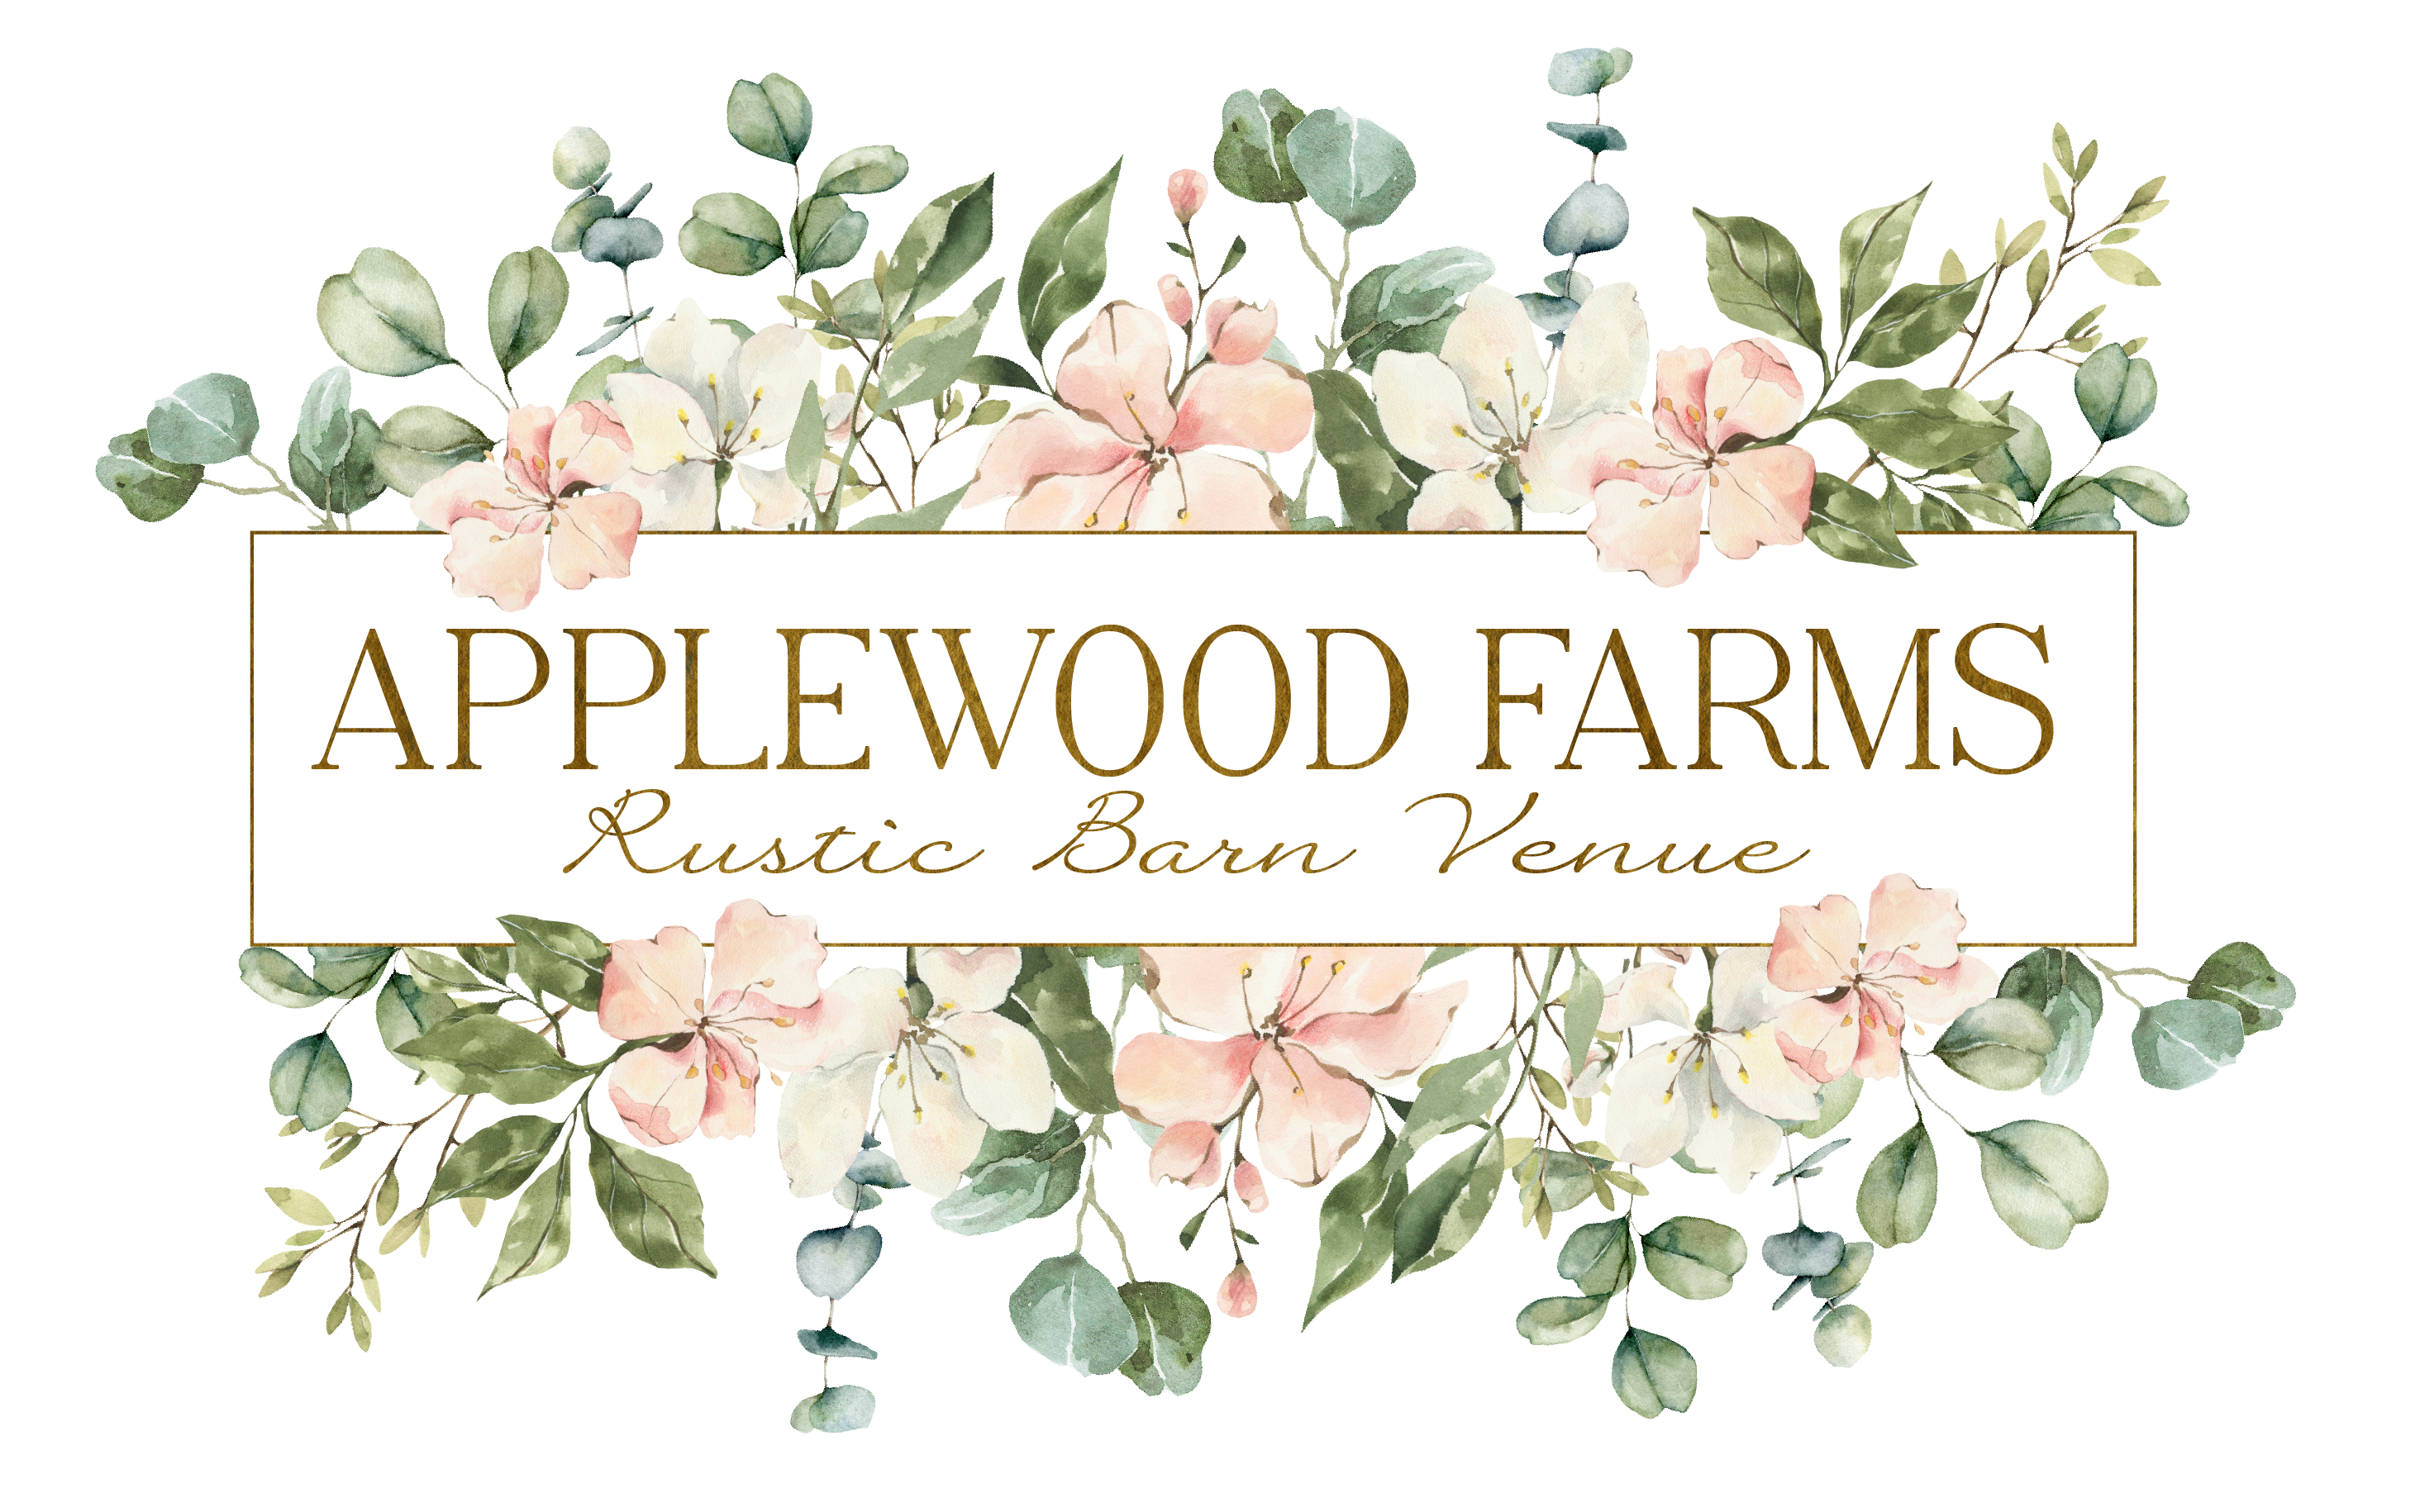 Rustic Barn Venue Applewood Farms